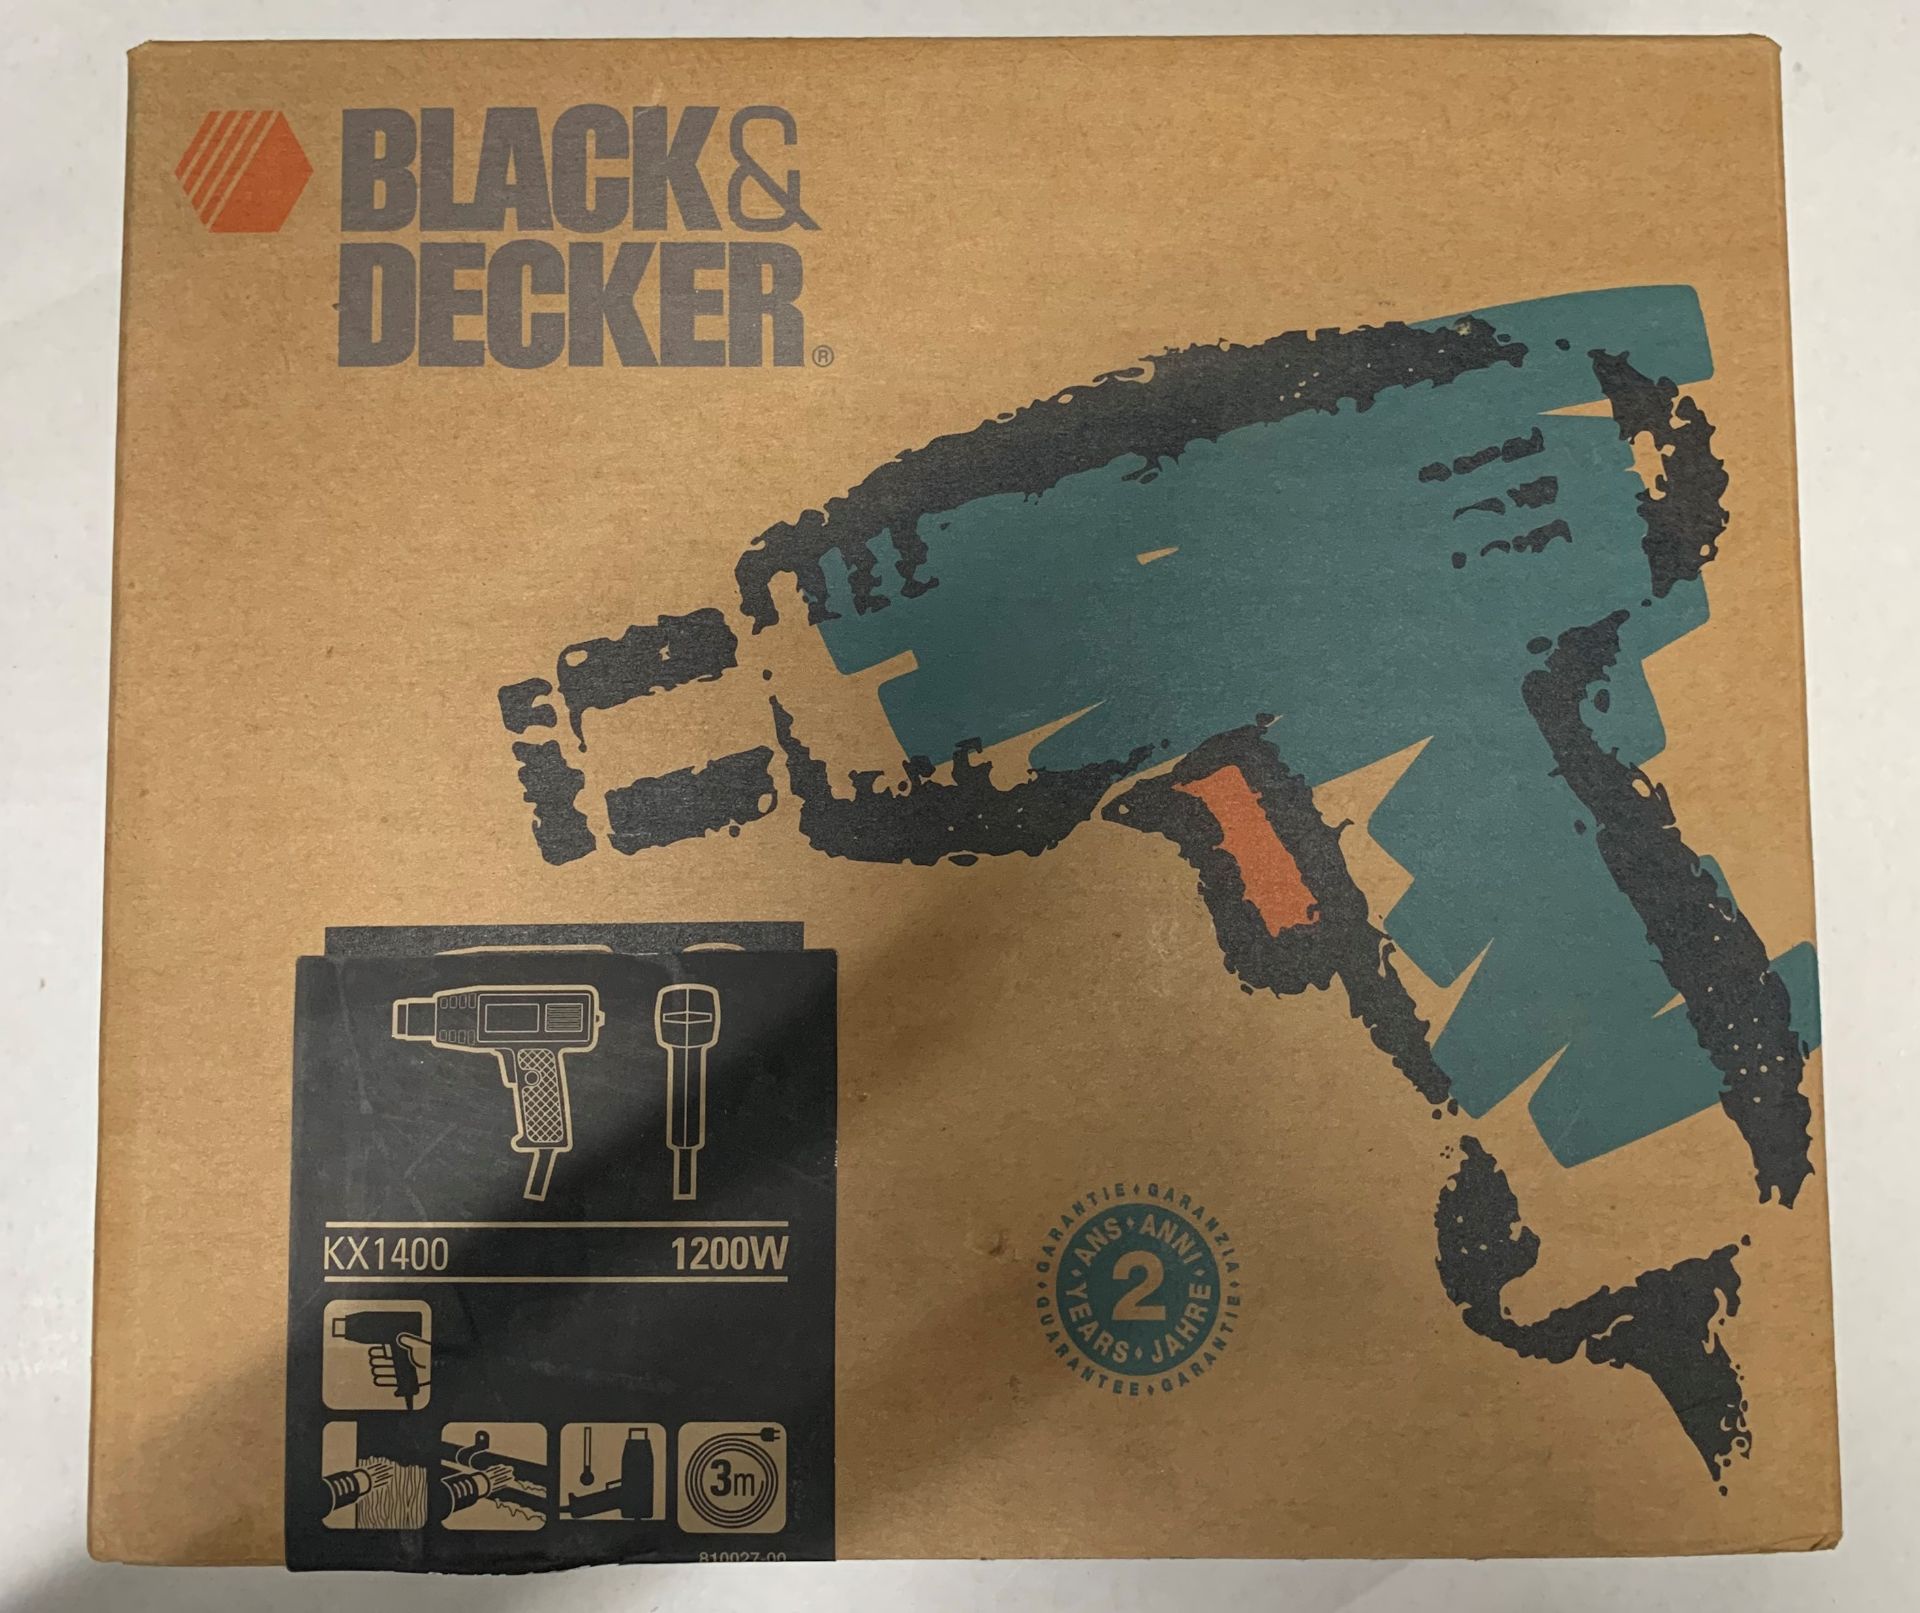 Black & decker KX1400 heatgun